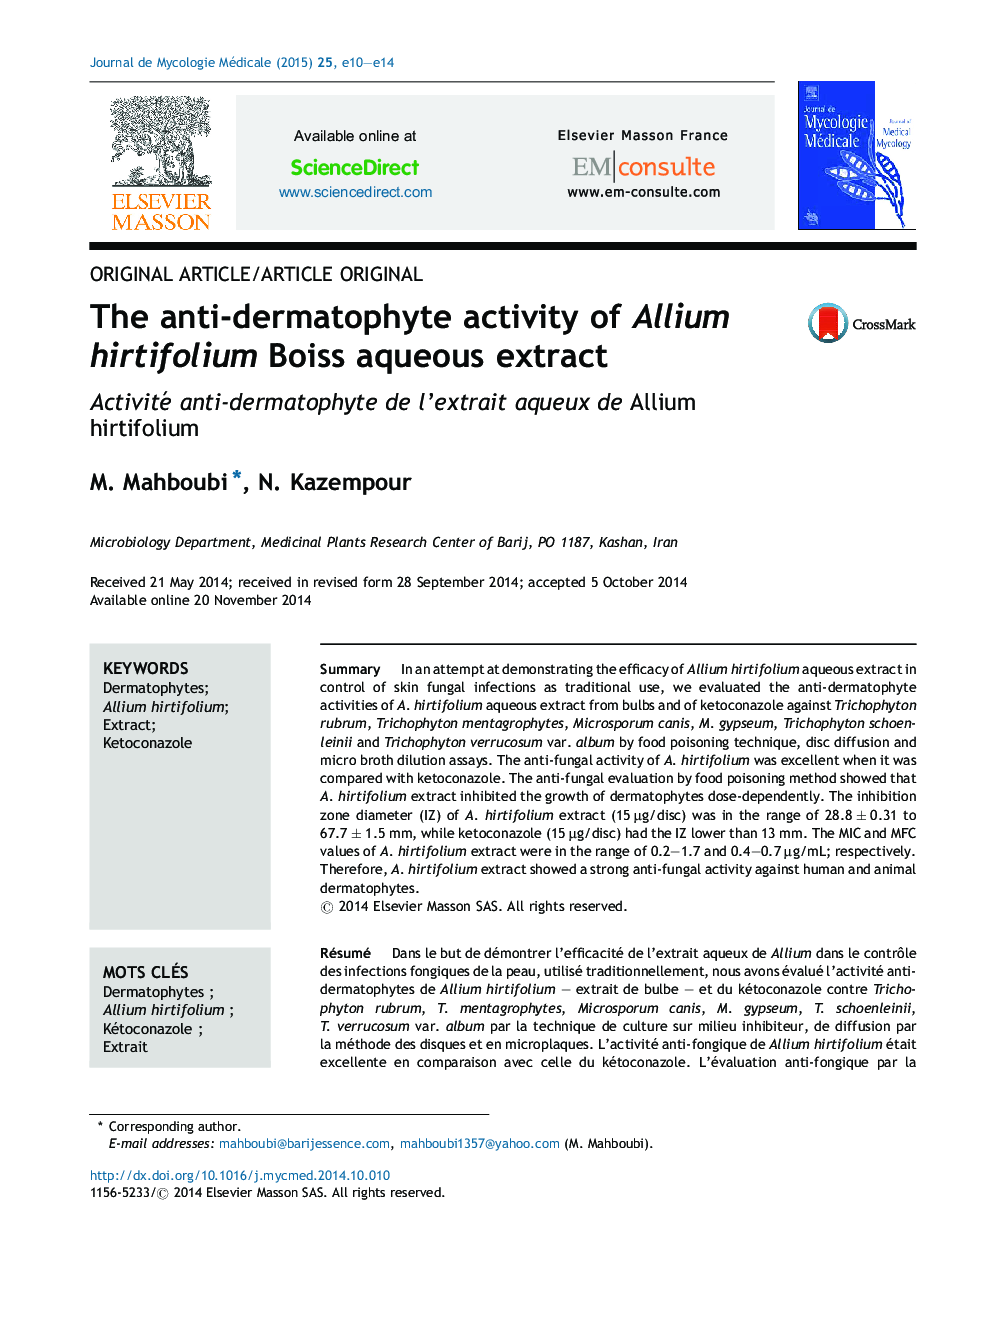 The anti-dermatophyte activity of Allium hirtifolium Boiss aqueous extract